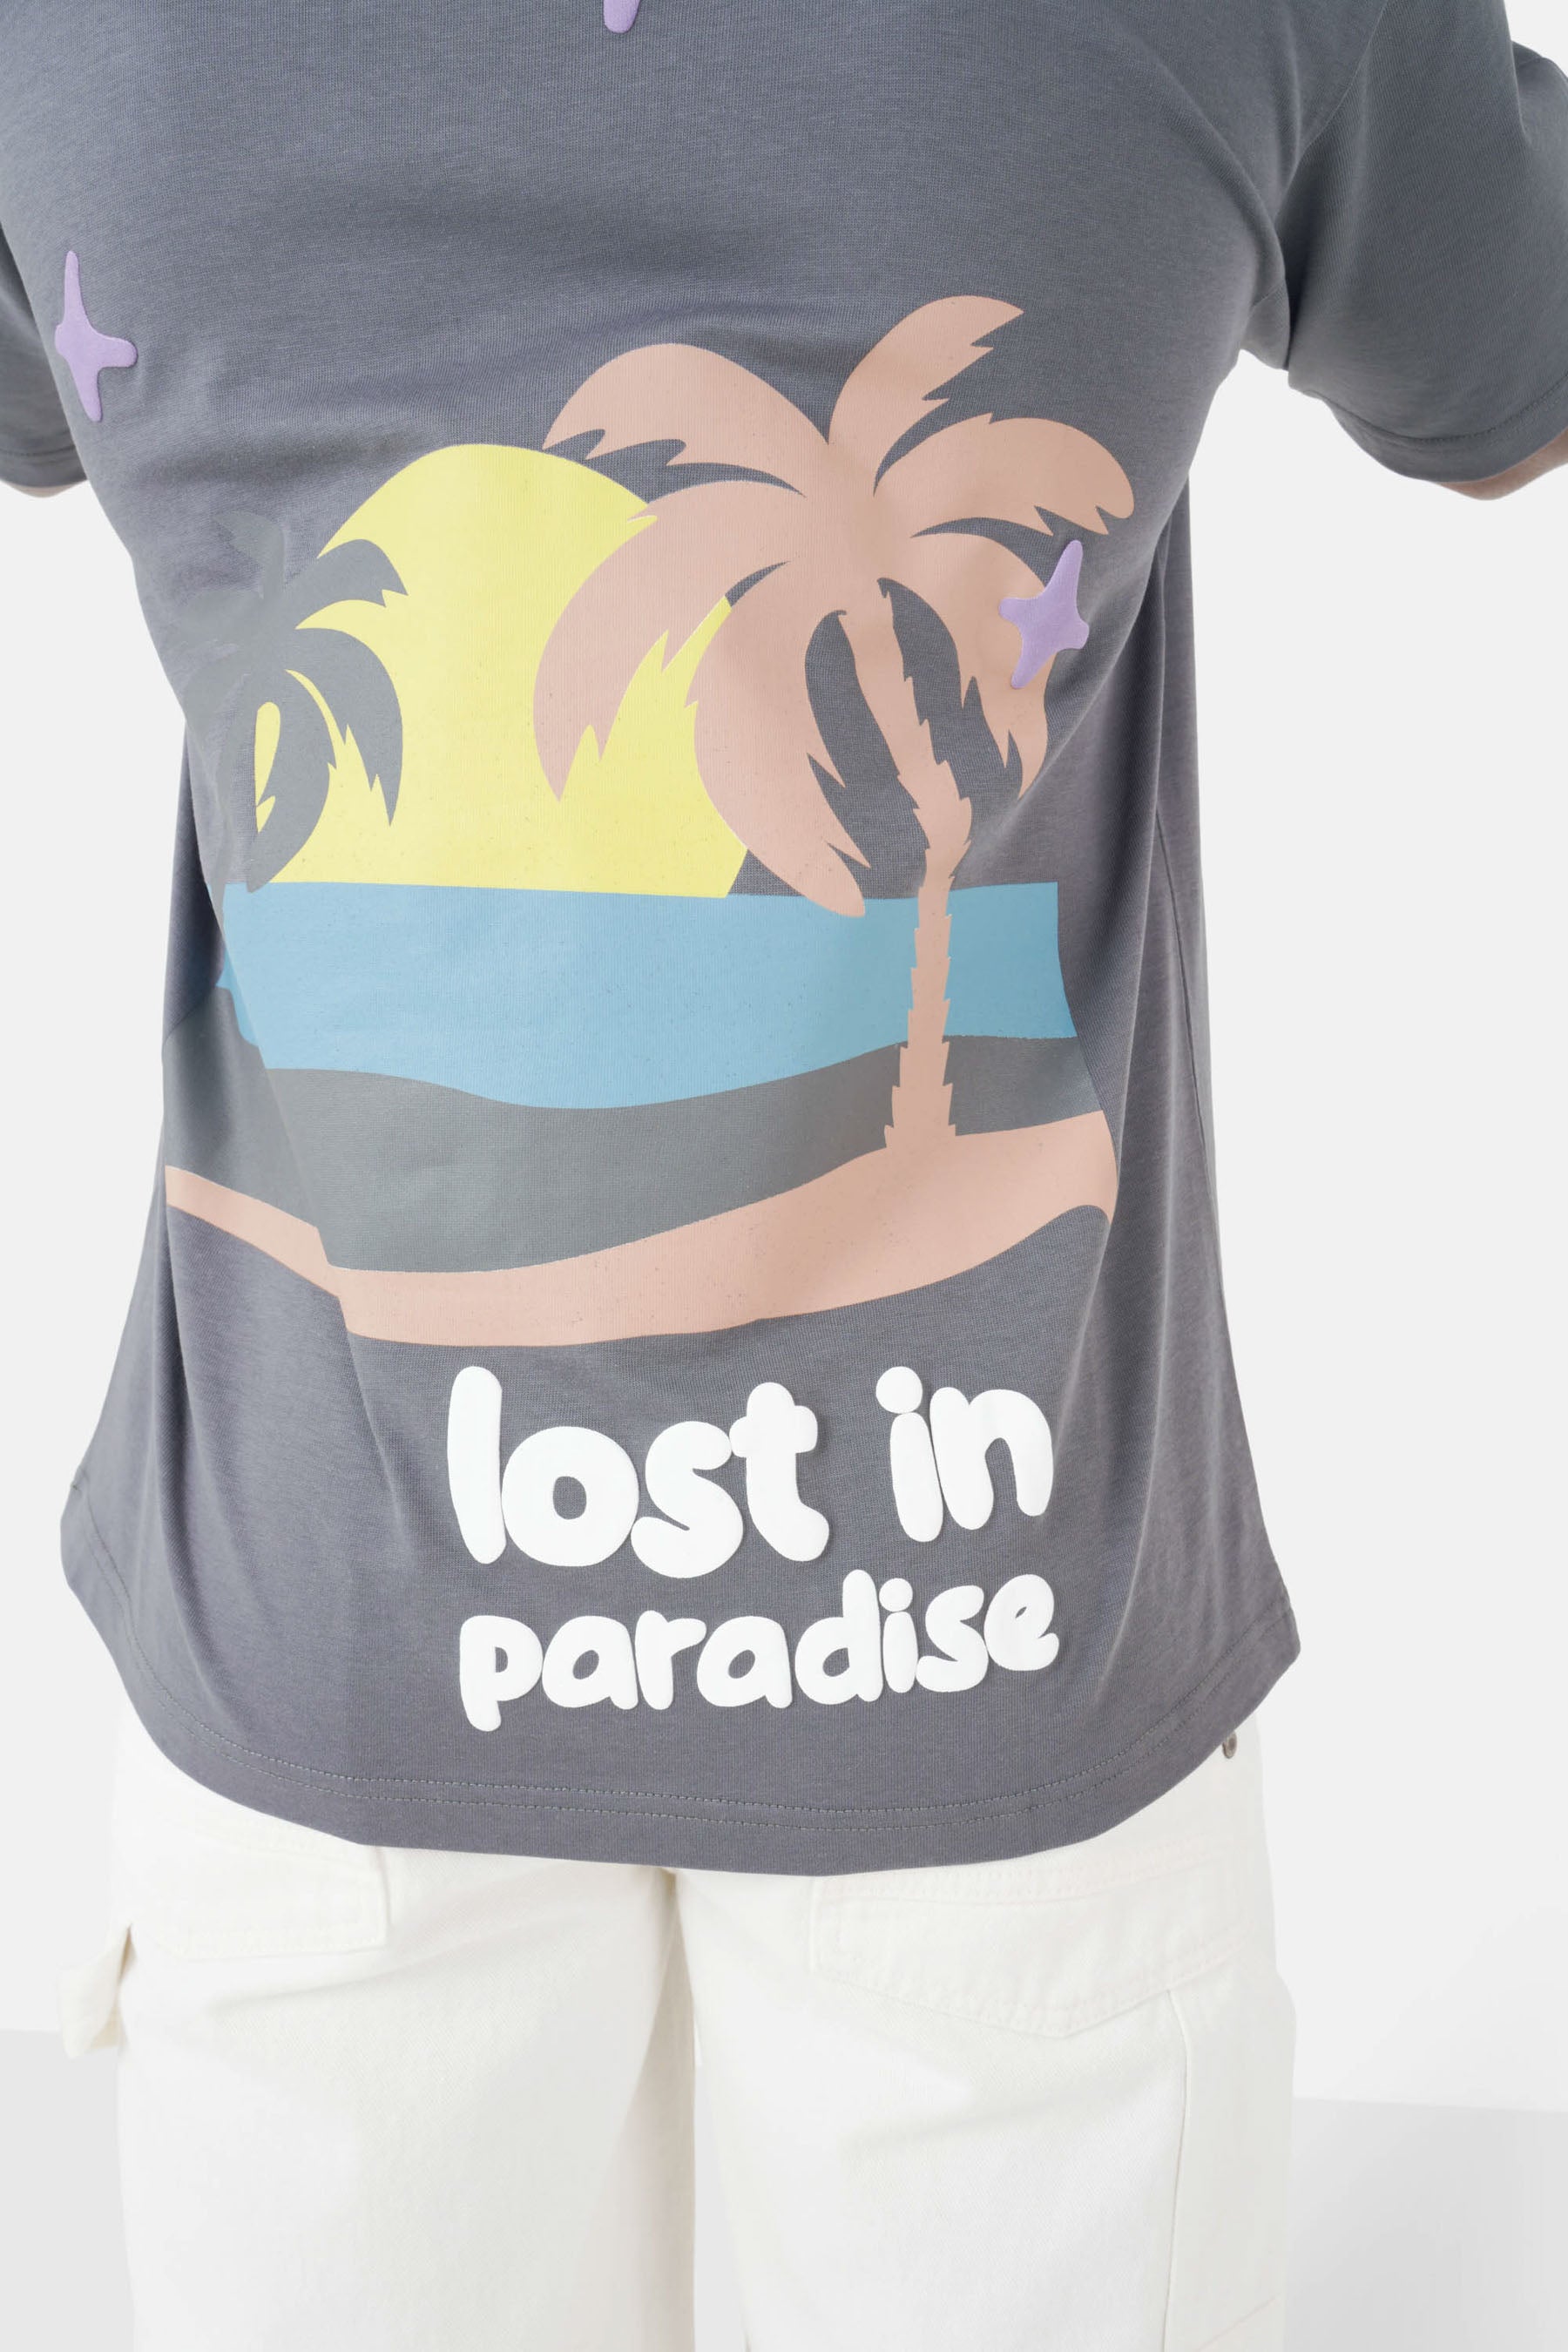 Lost in paradise printed t-shirt dark Grey 